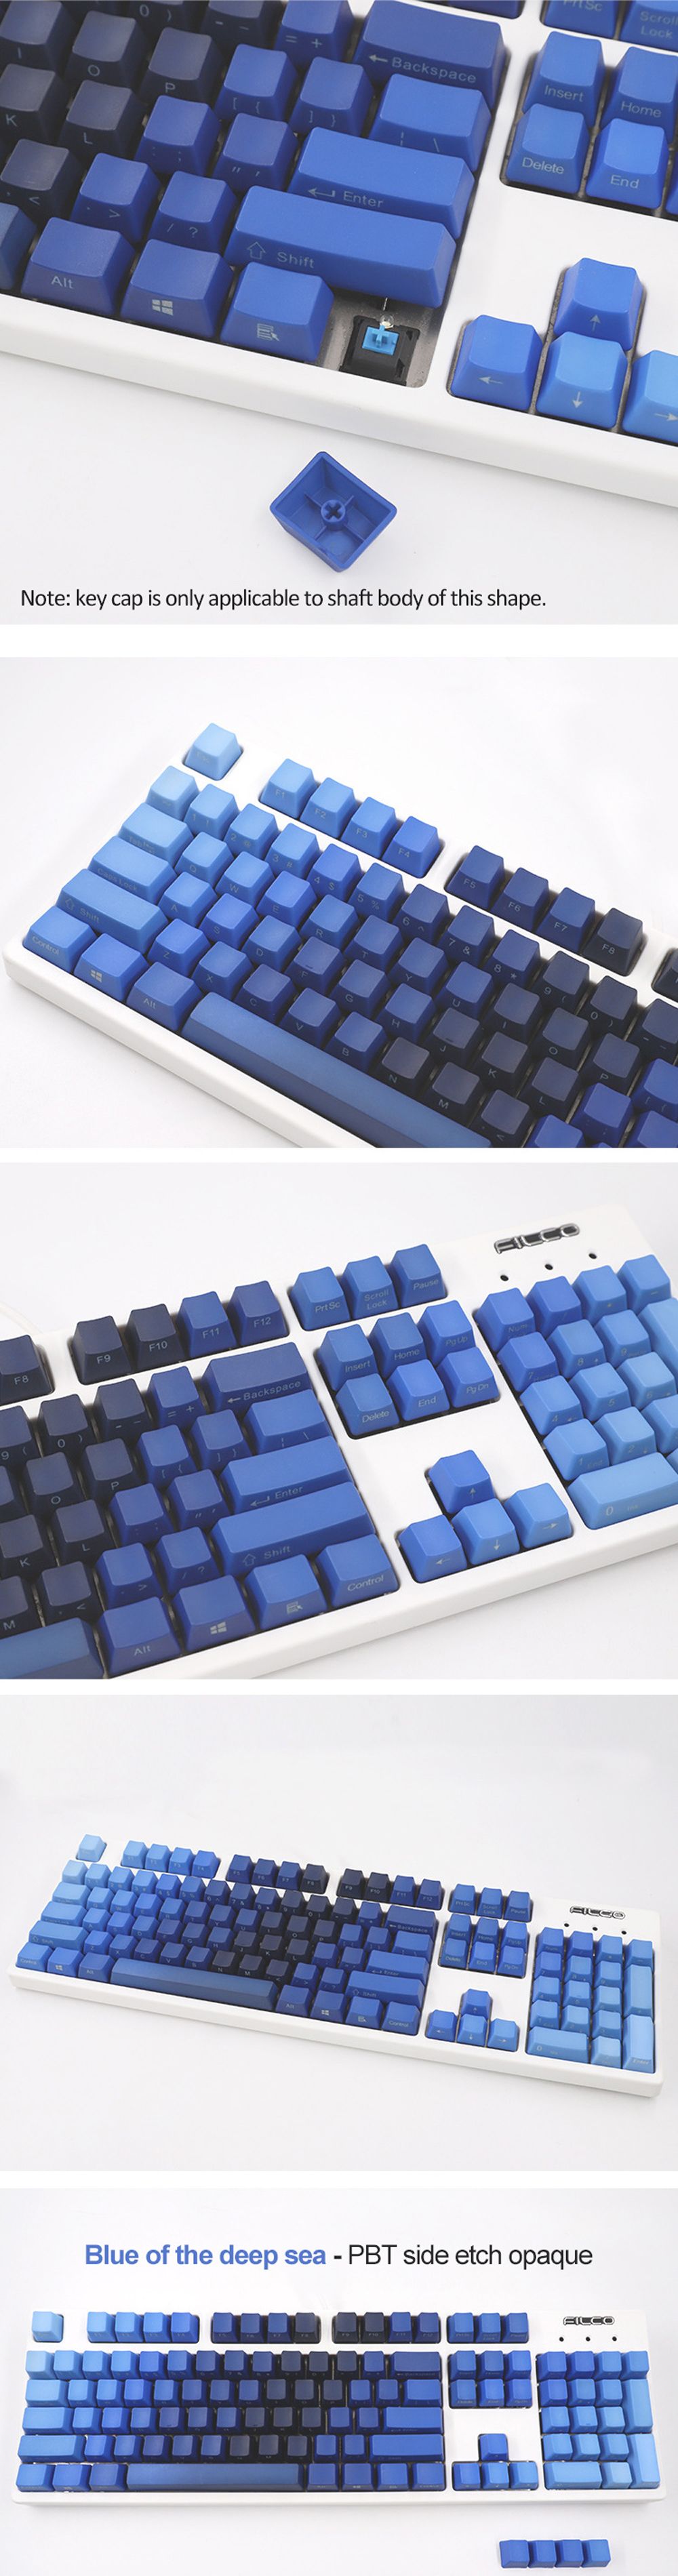 108-Keys-Translucent-Keycap-Set-OEM-Profile-PBT-Dye-sub-Keycaps-for-Mechanical-Keyboard-1654224